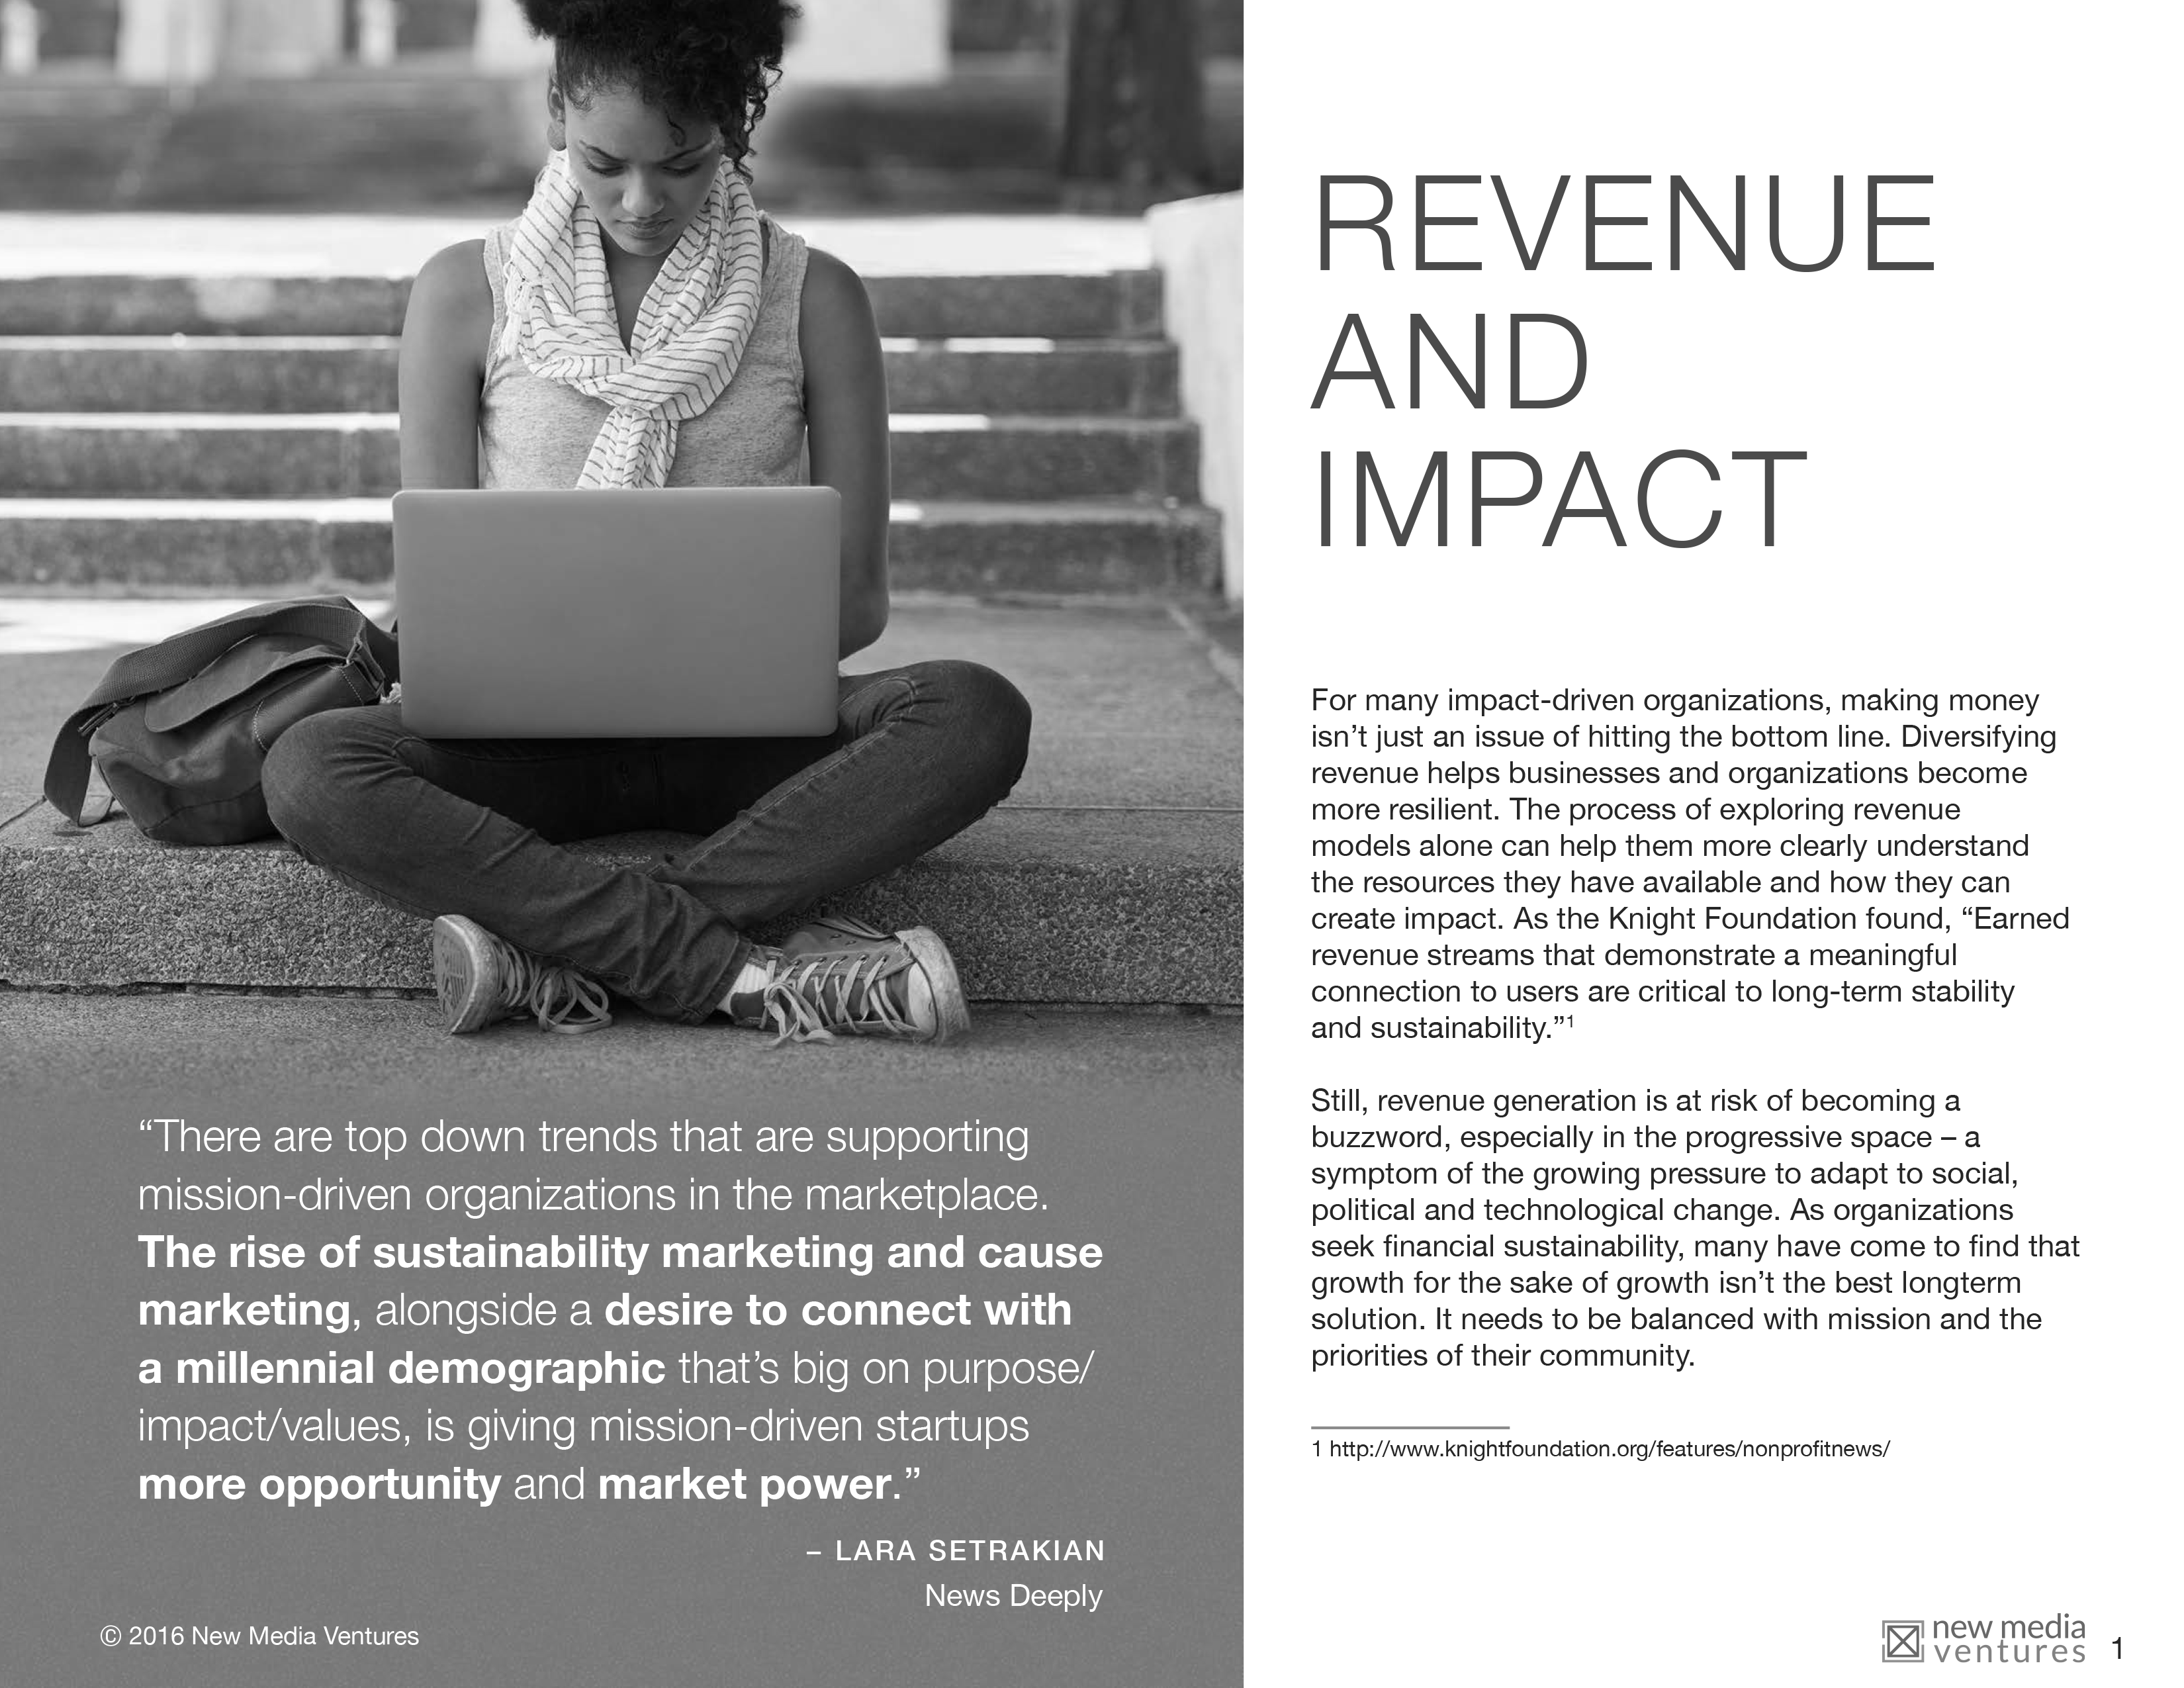 Making Money for Impact | New Media Ventures